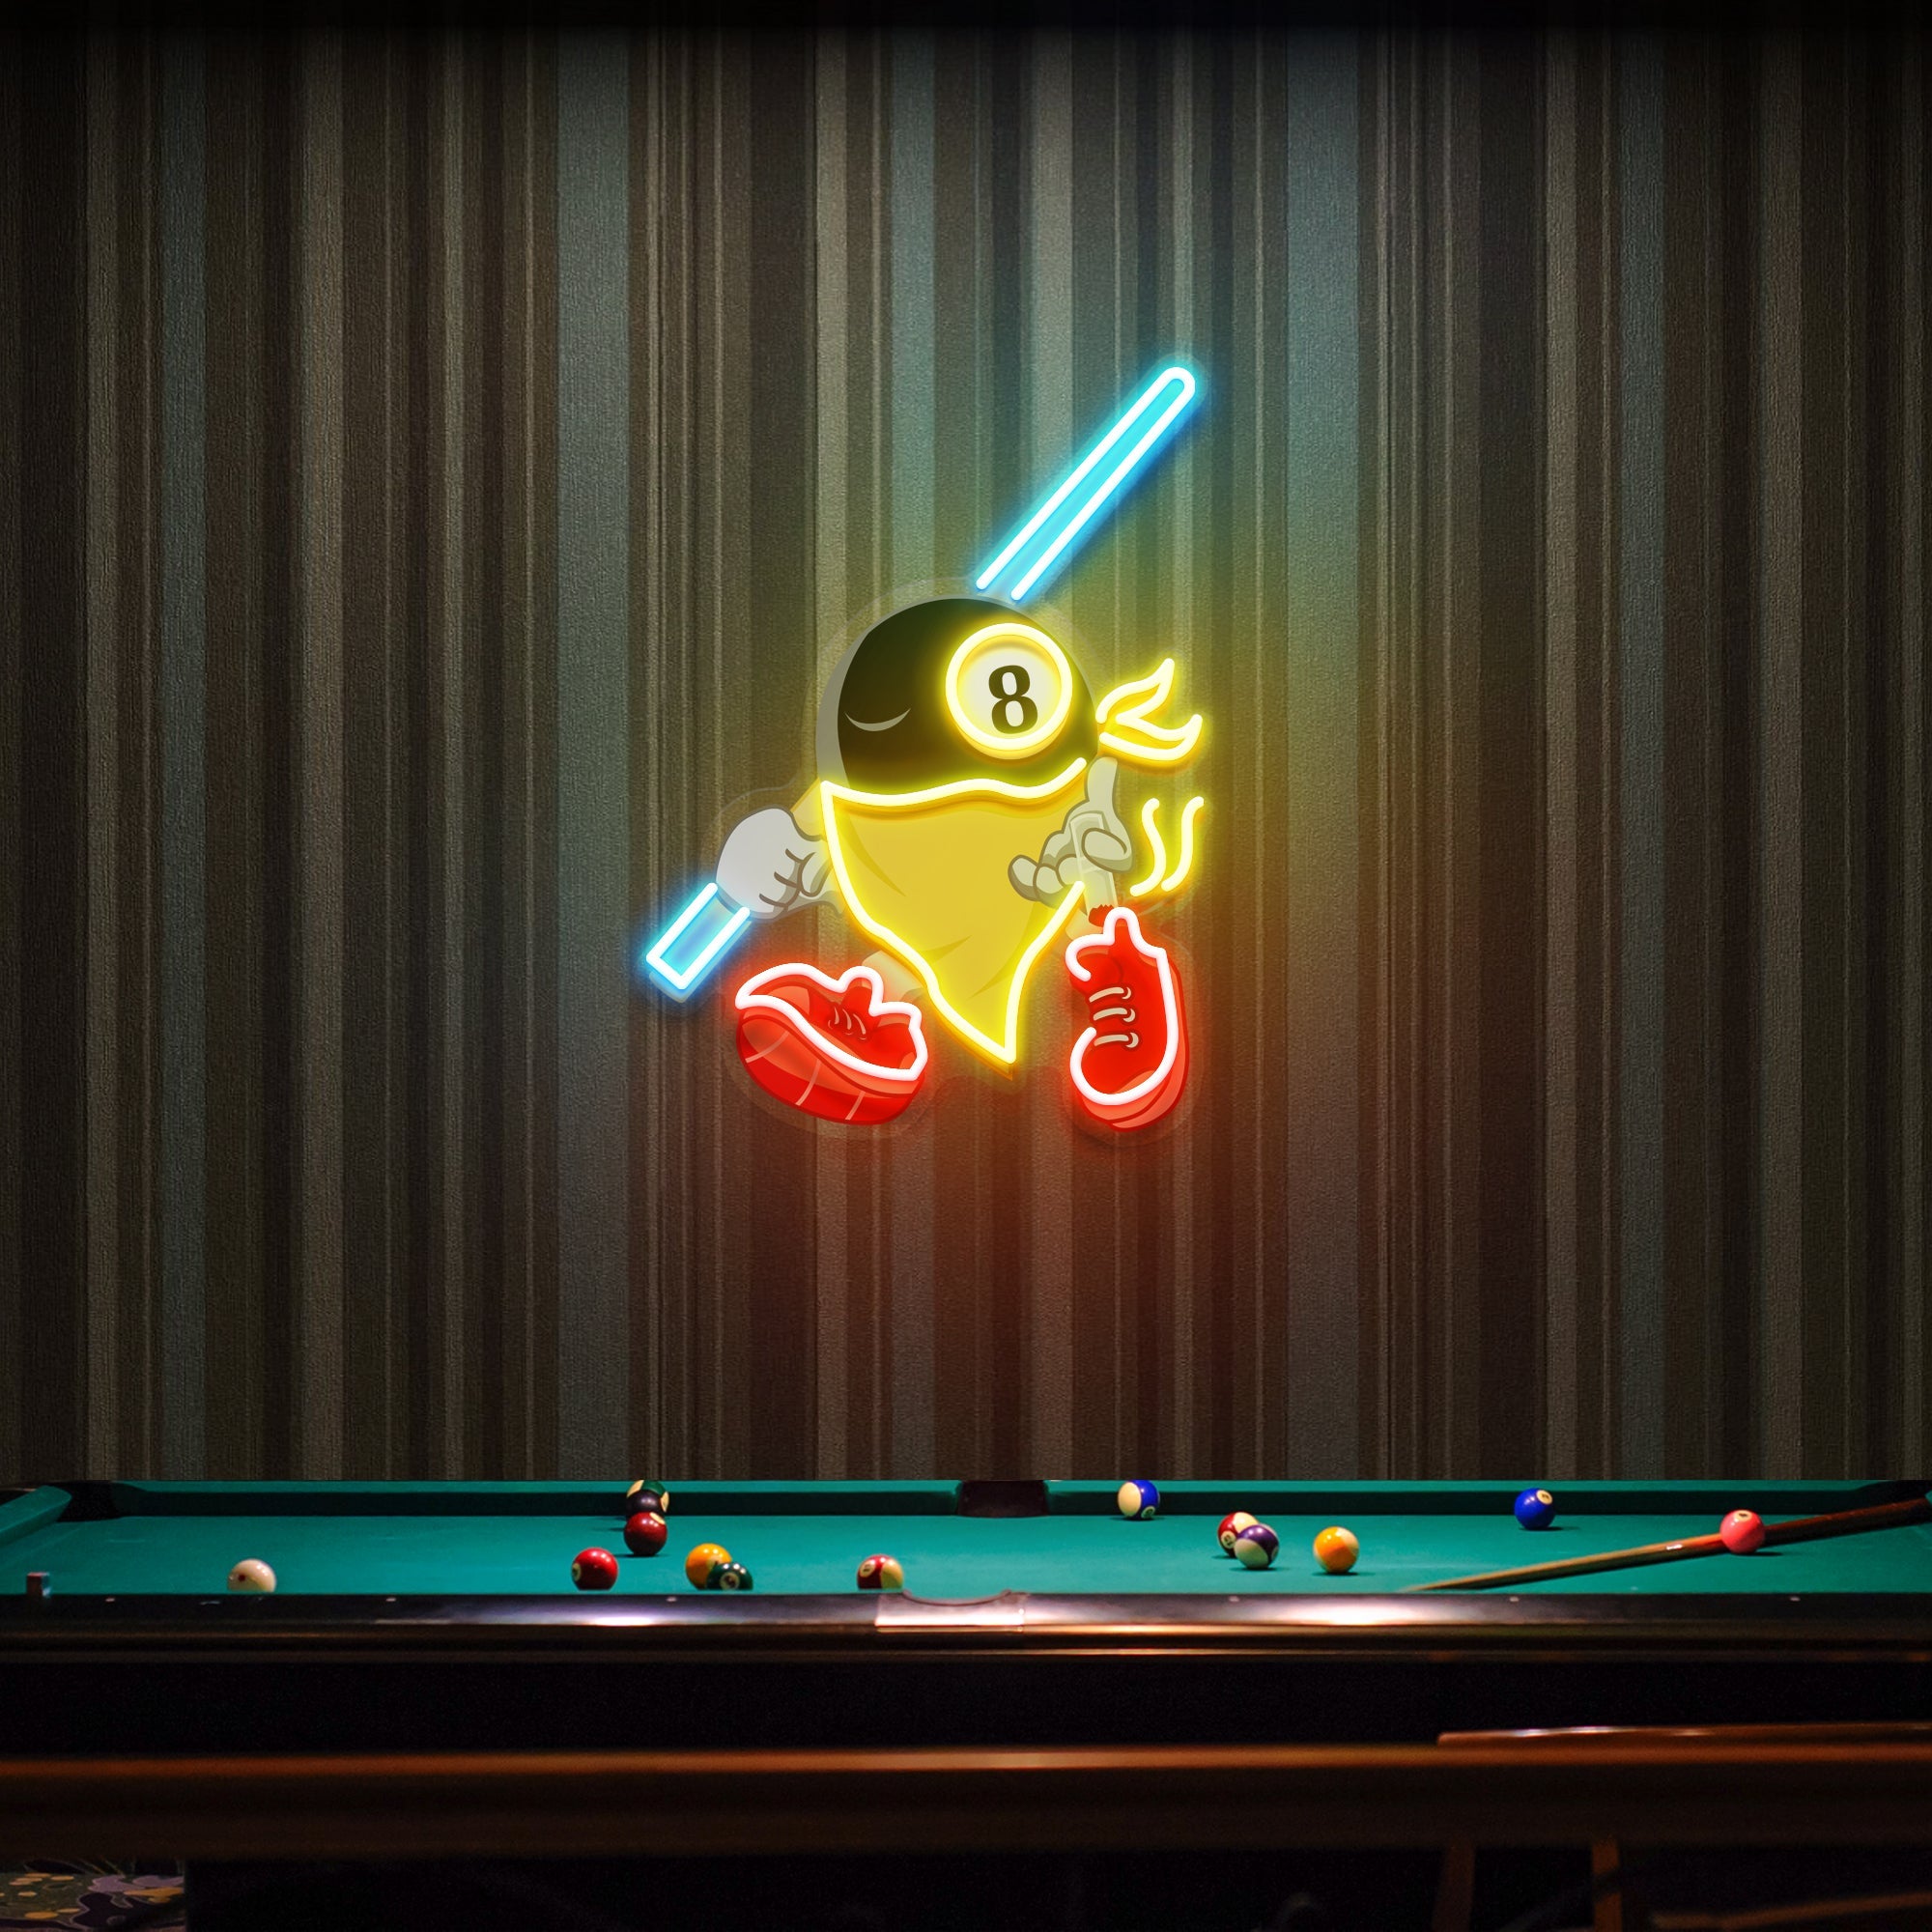 Billiard, Pool And Snooker Sport Artwork Led Neon Sign Light - Neonbir